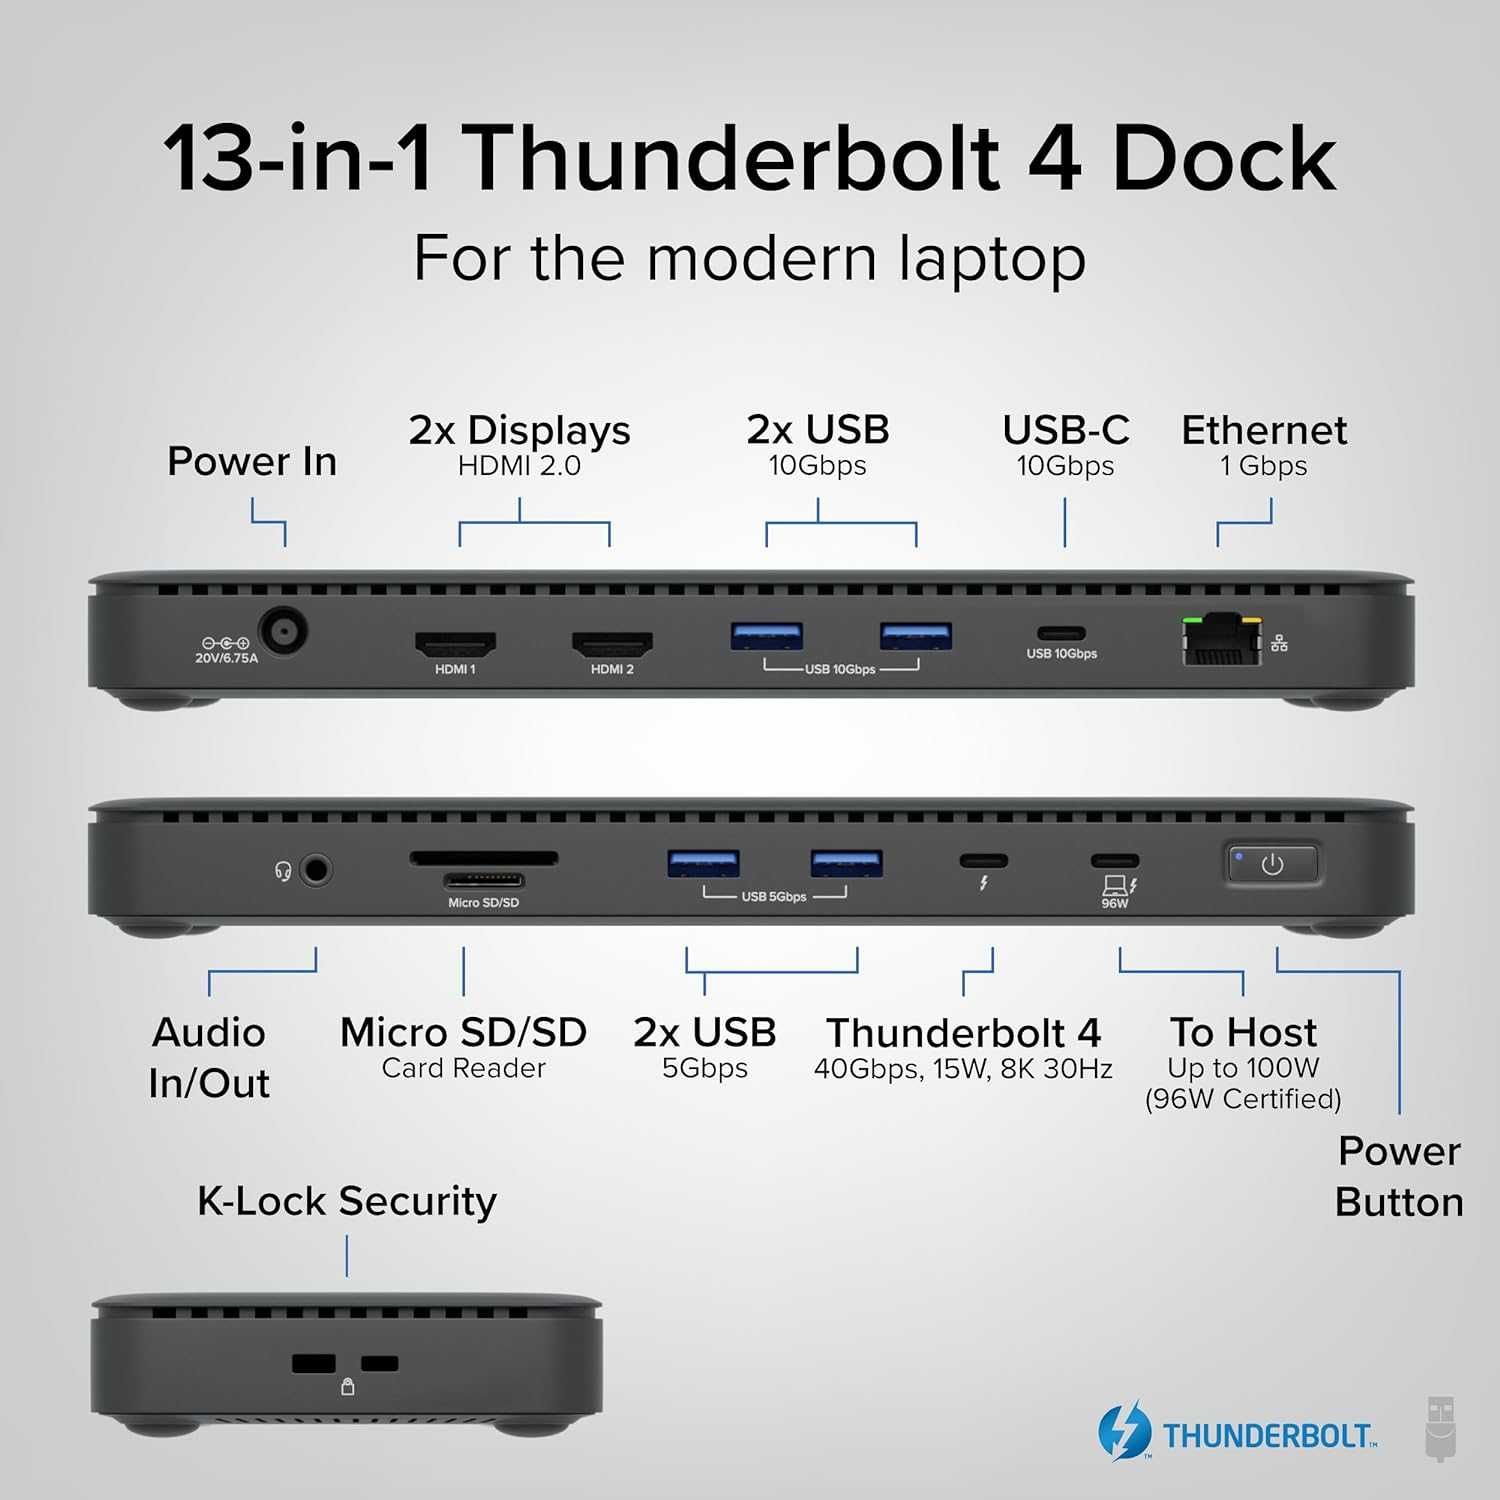 Plugable докинг станция Thunderbolt 4, един 8K или два 4K HDMI, 100 W